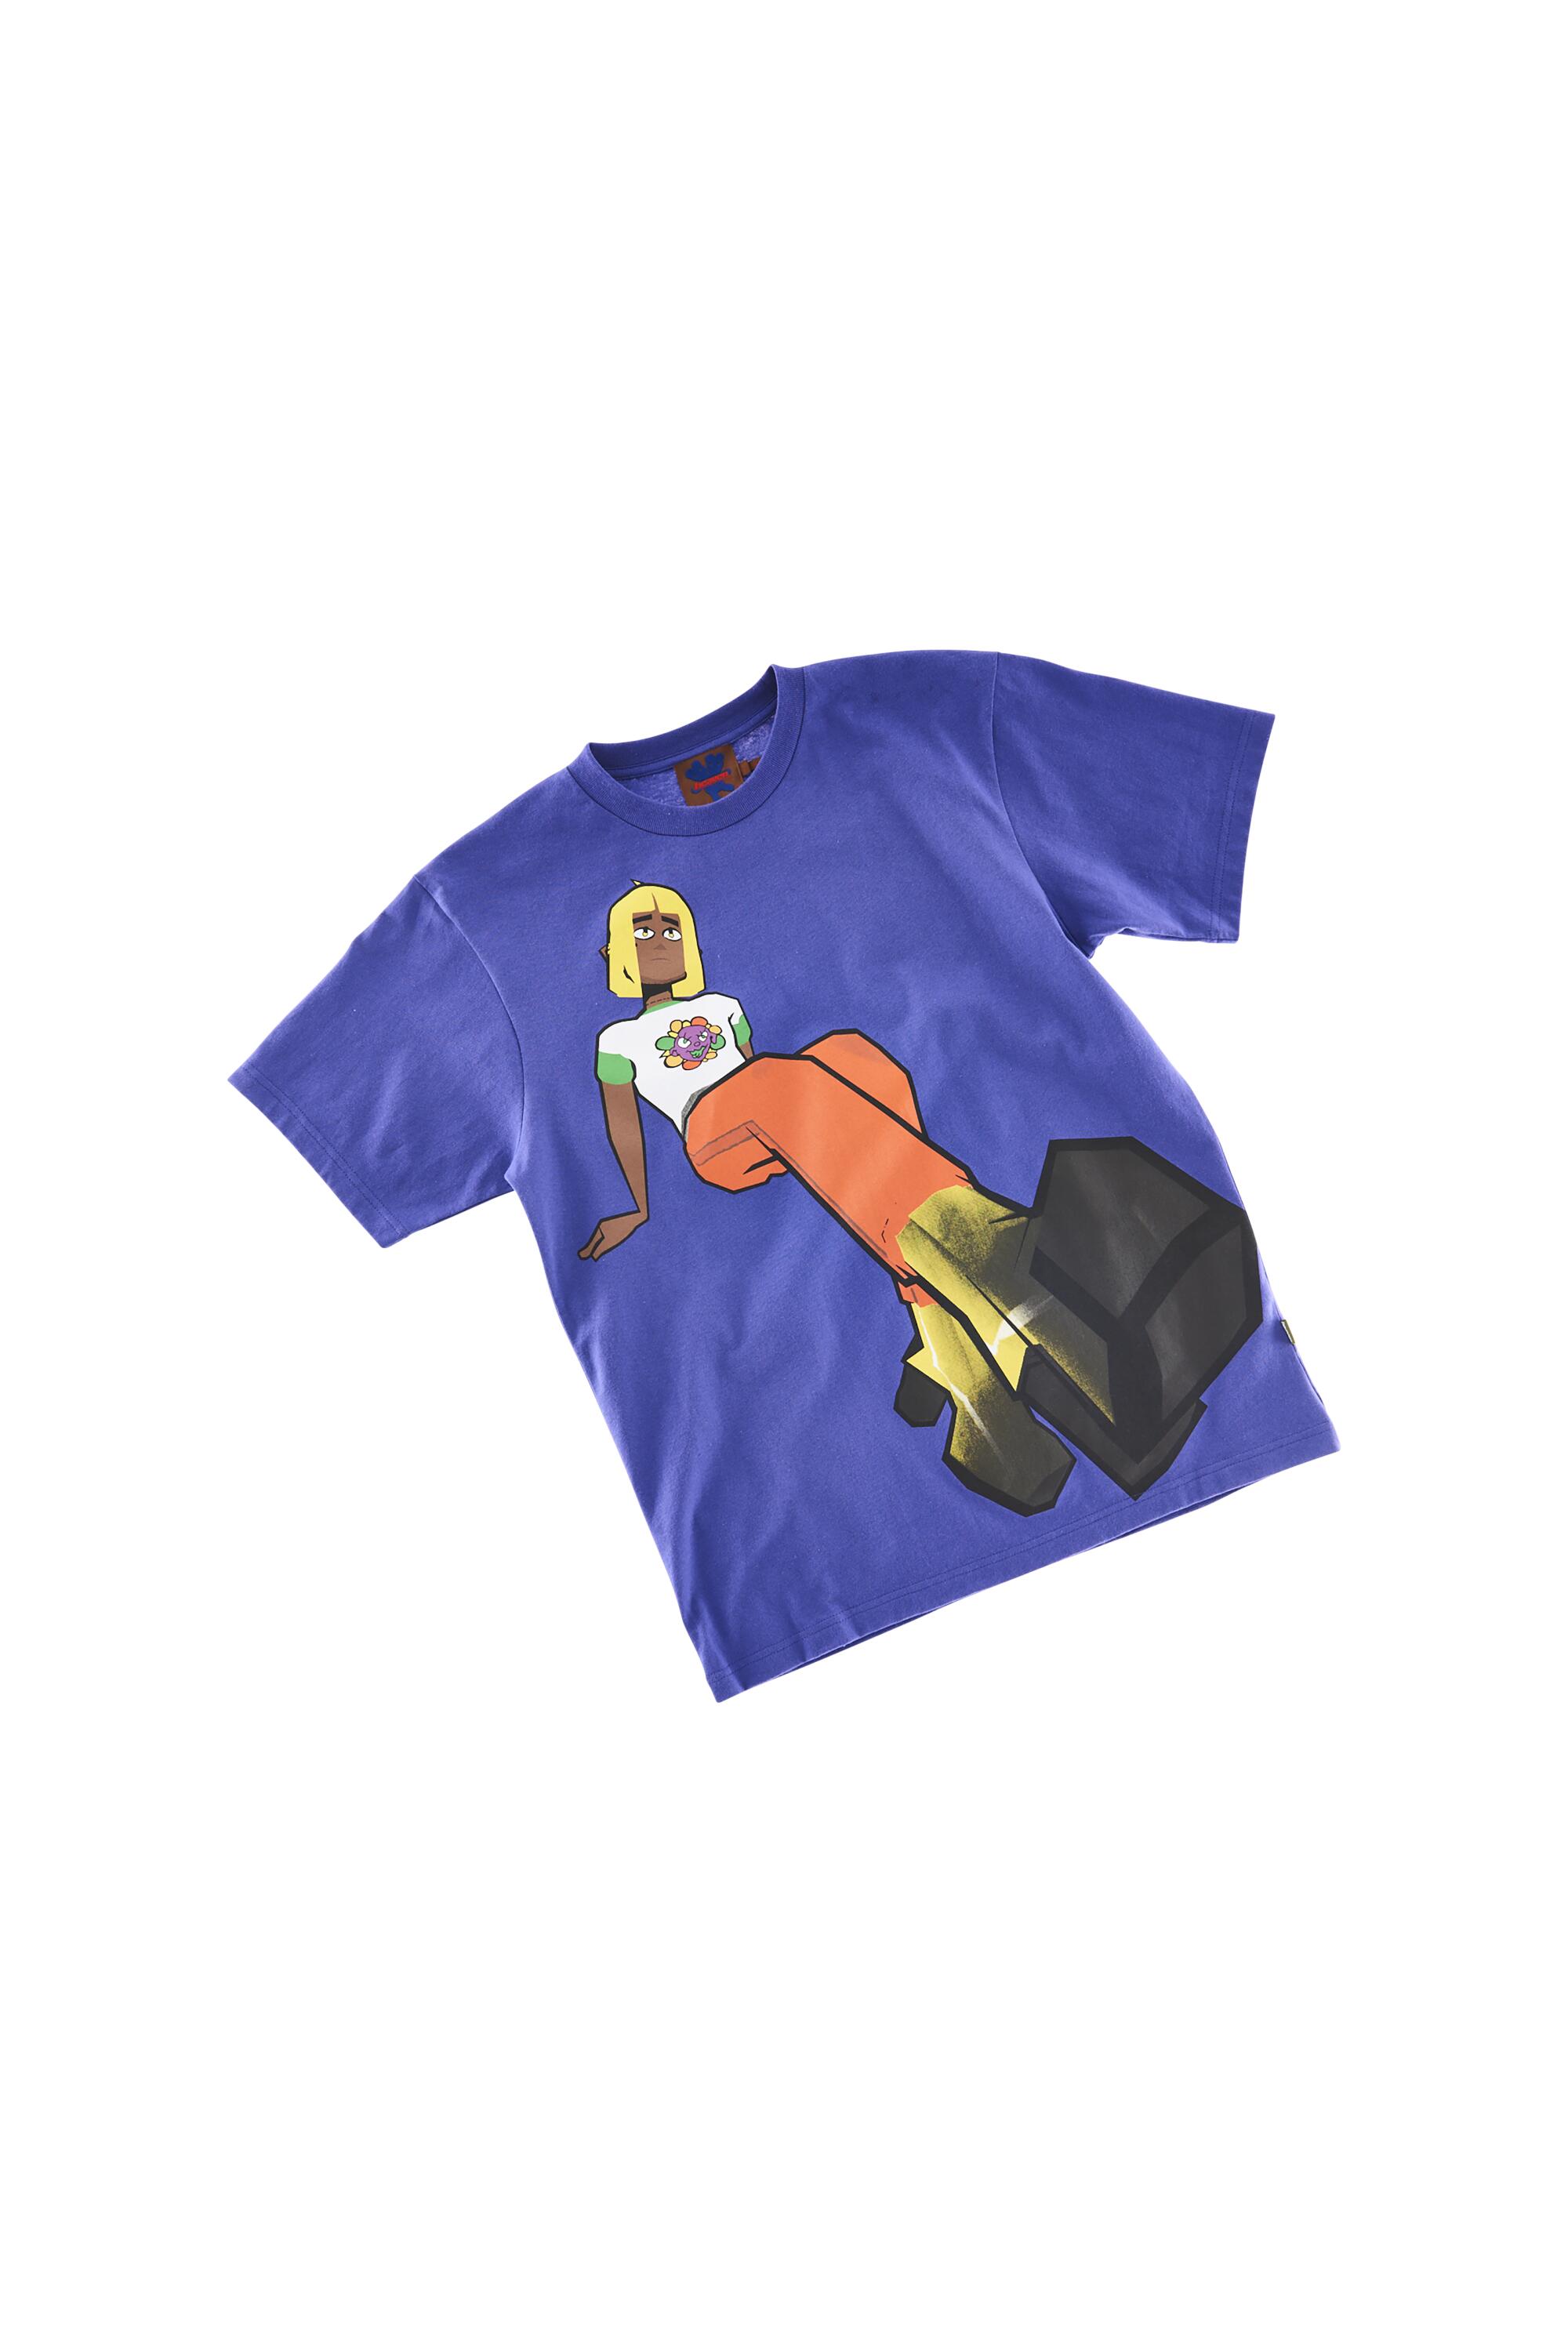 Heaven by Marc Jacobs Techno Girl T-shirt, $40, marcjacobs.com